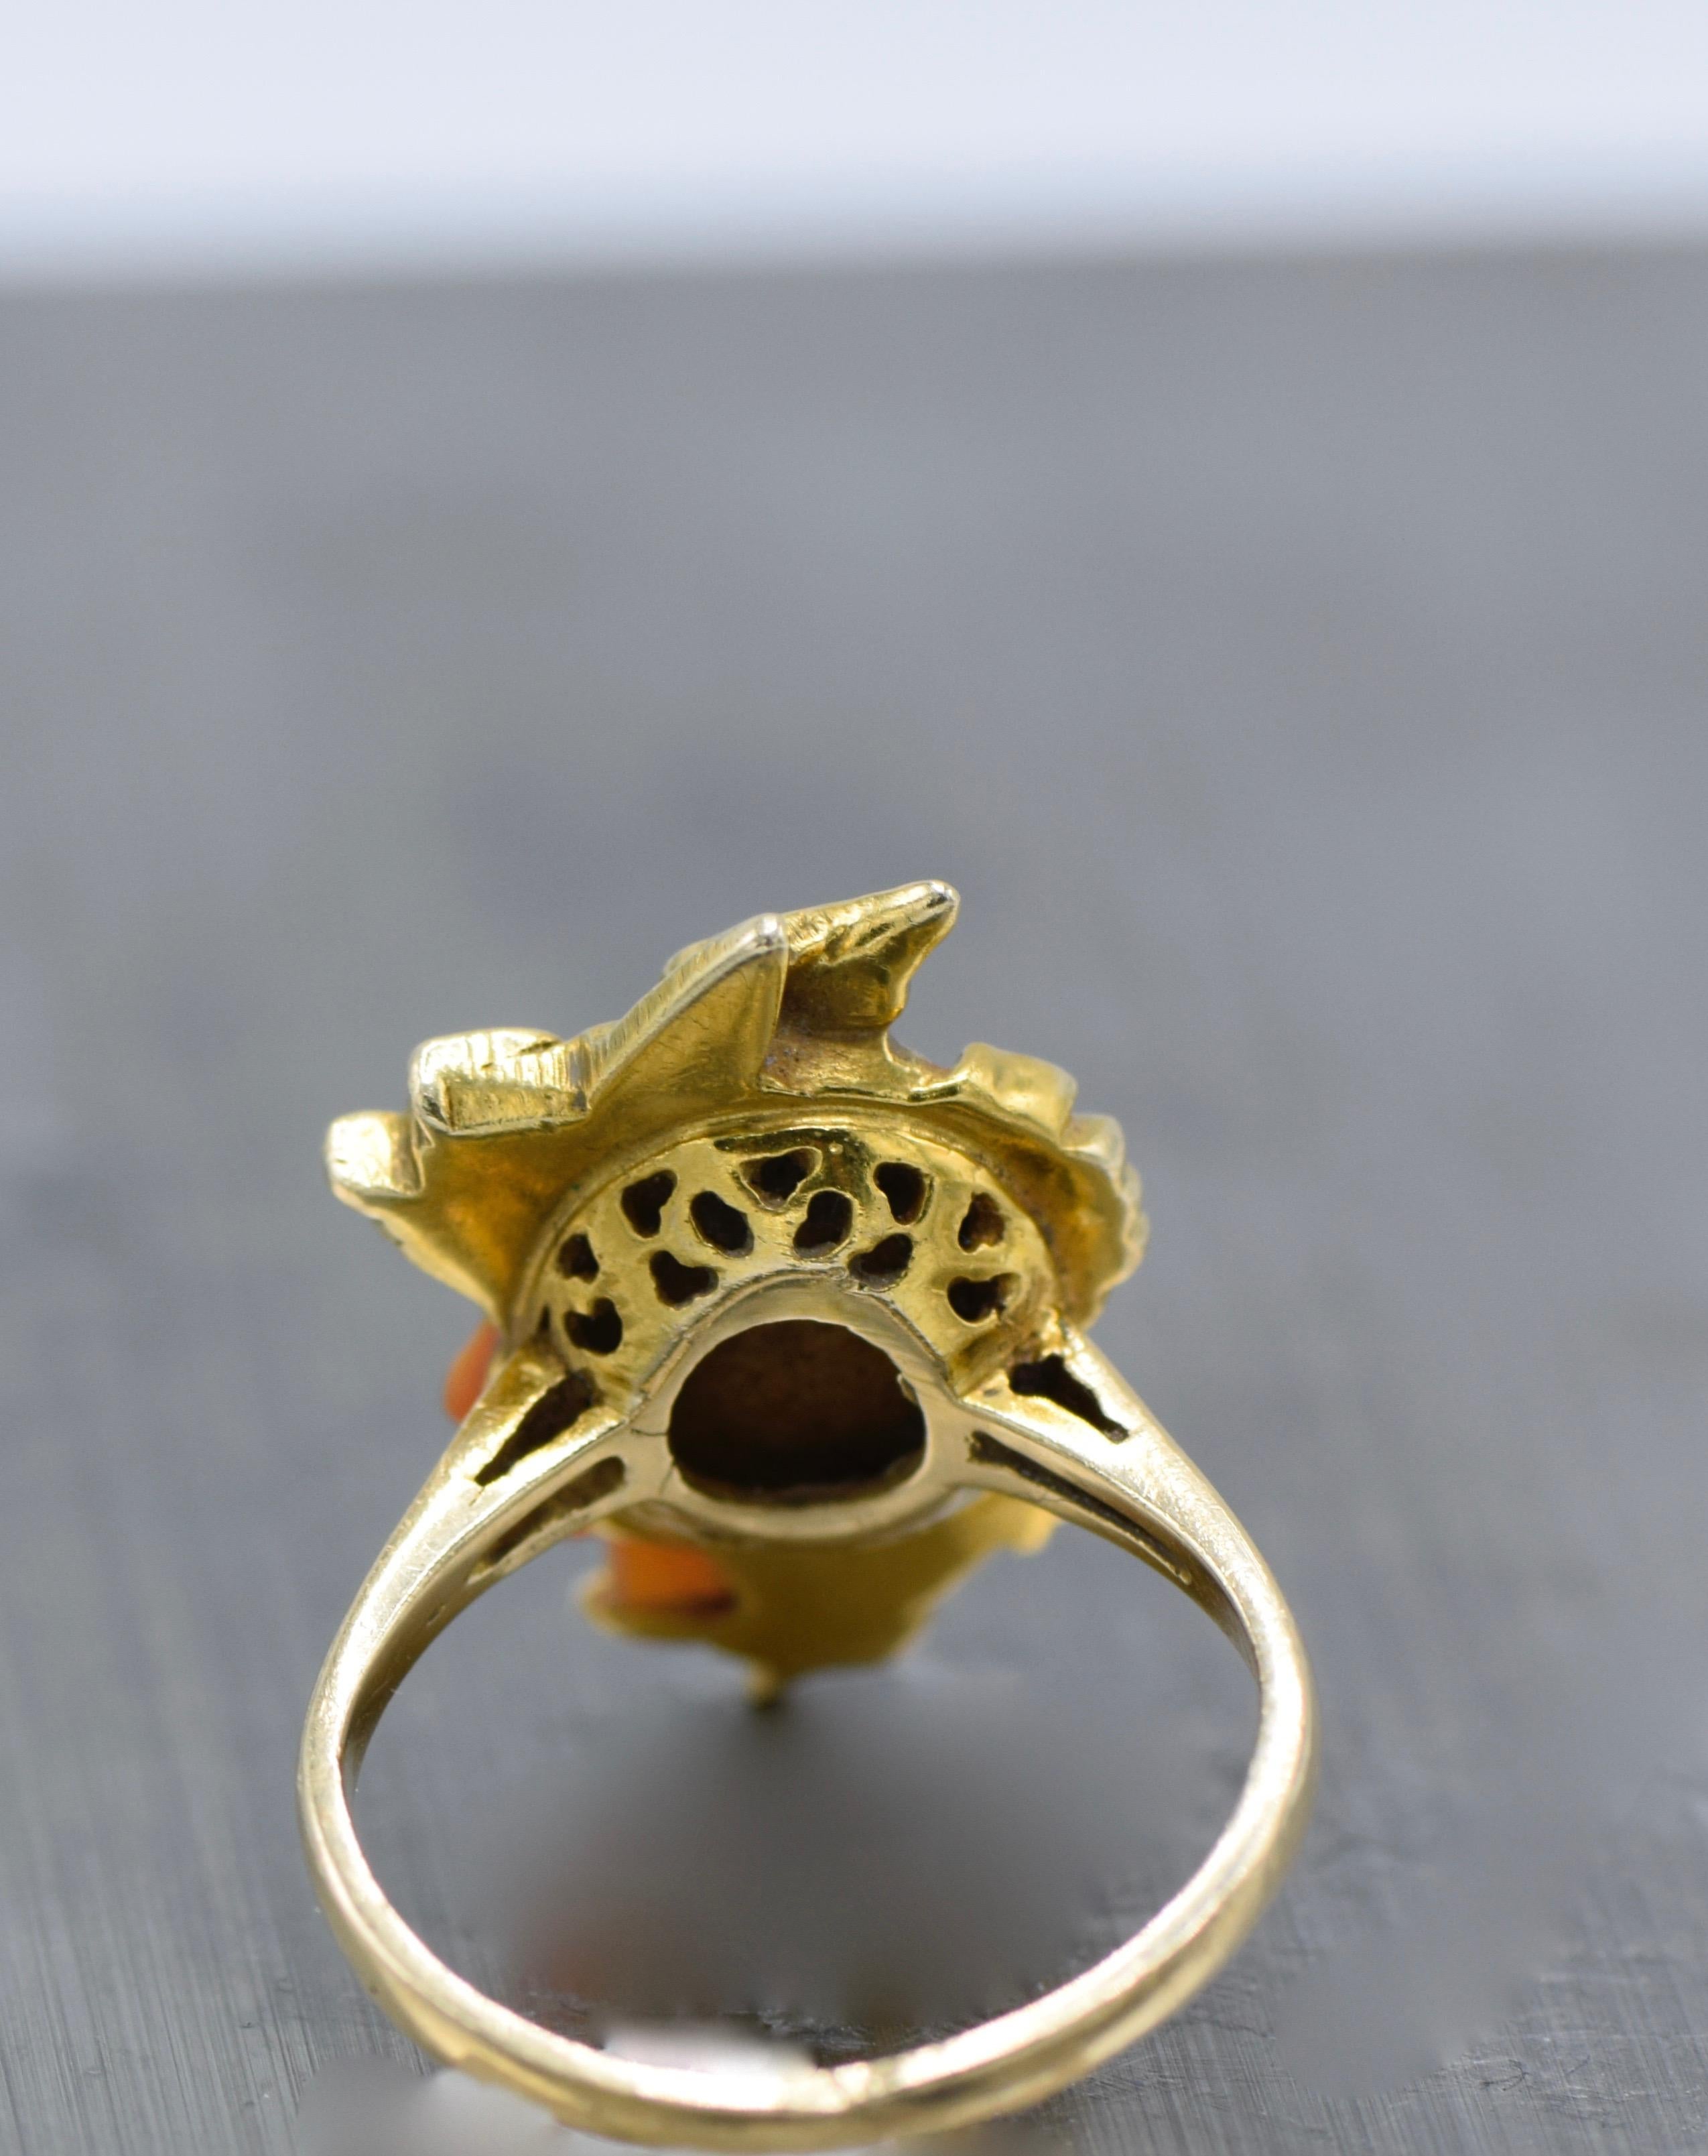 14K Gold art nouveau lady face shell diamond ring 

Diamond weight: 0.5

Size: 7.25

Face length: 23mmx 12mm 